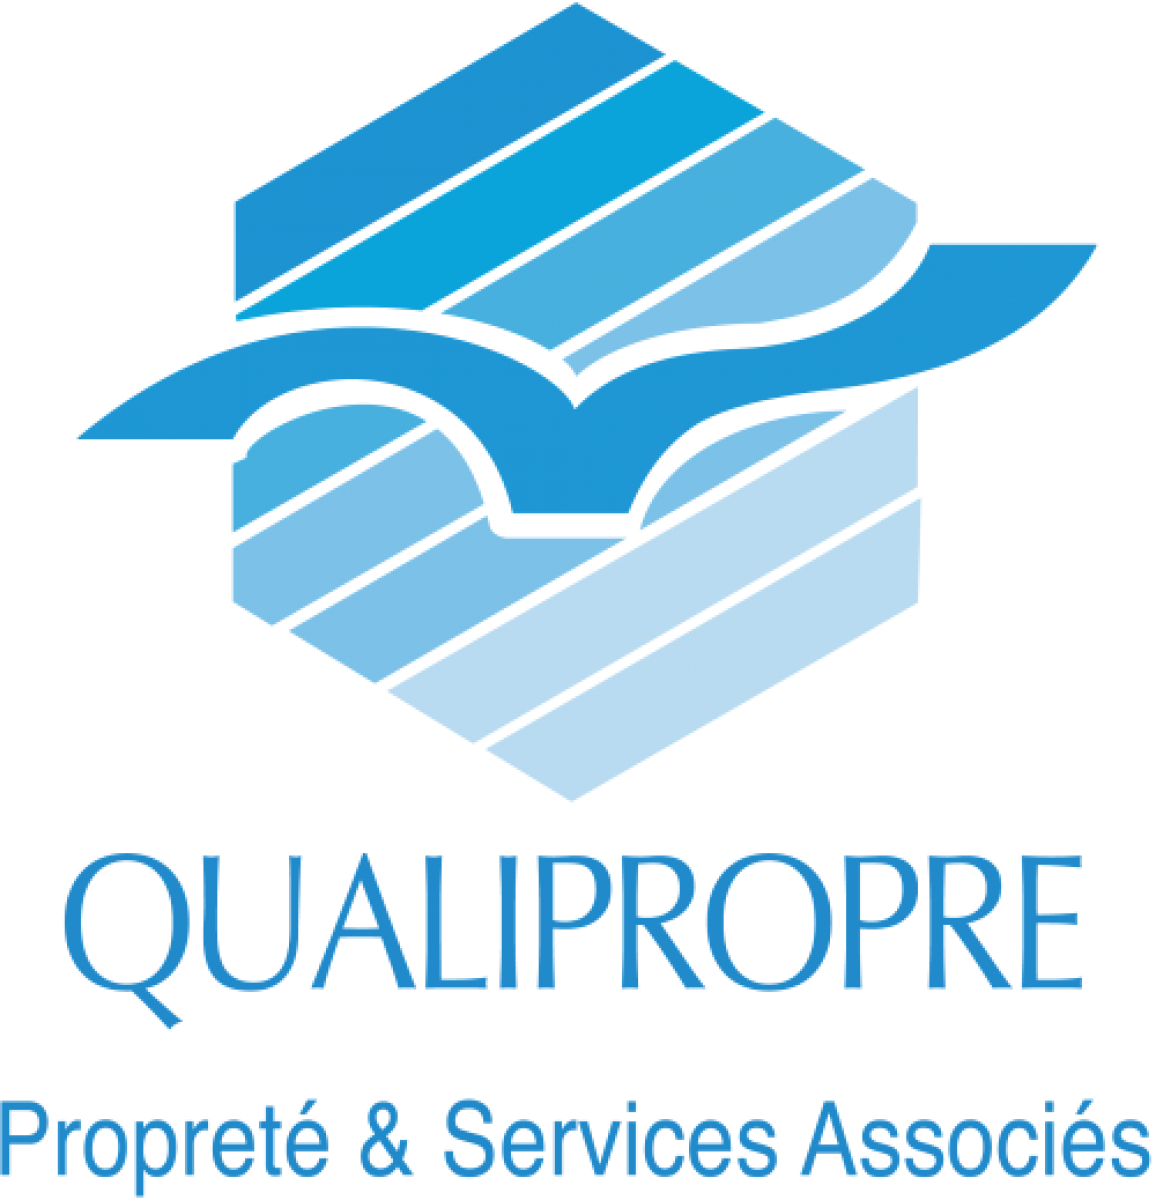 Certification Qualipropre